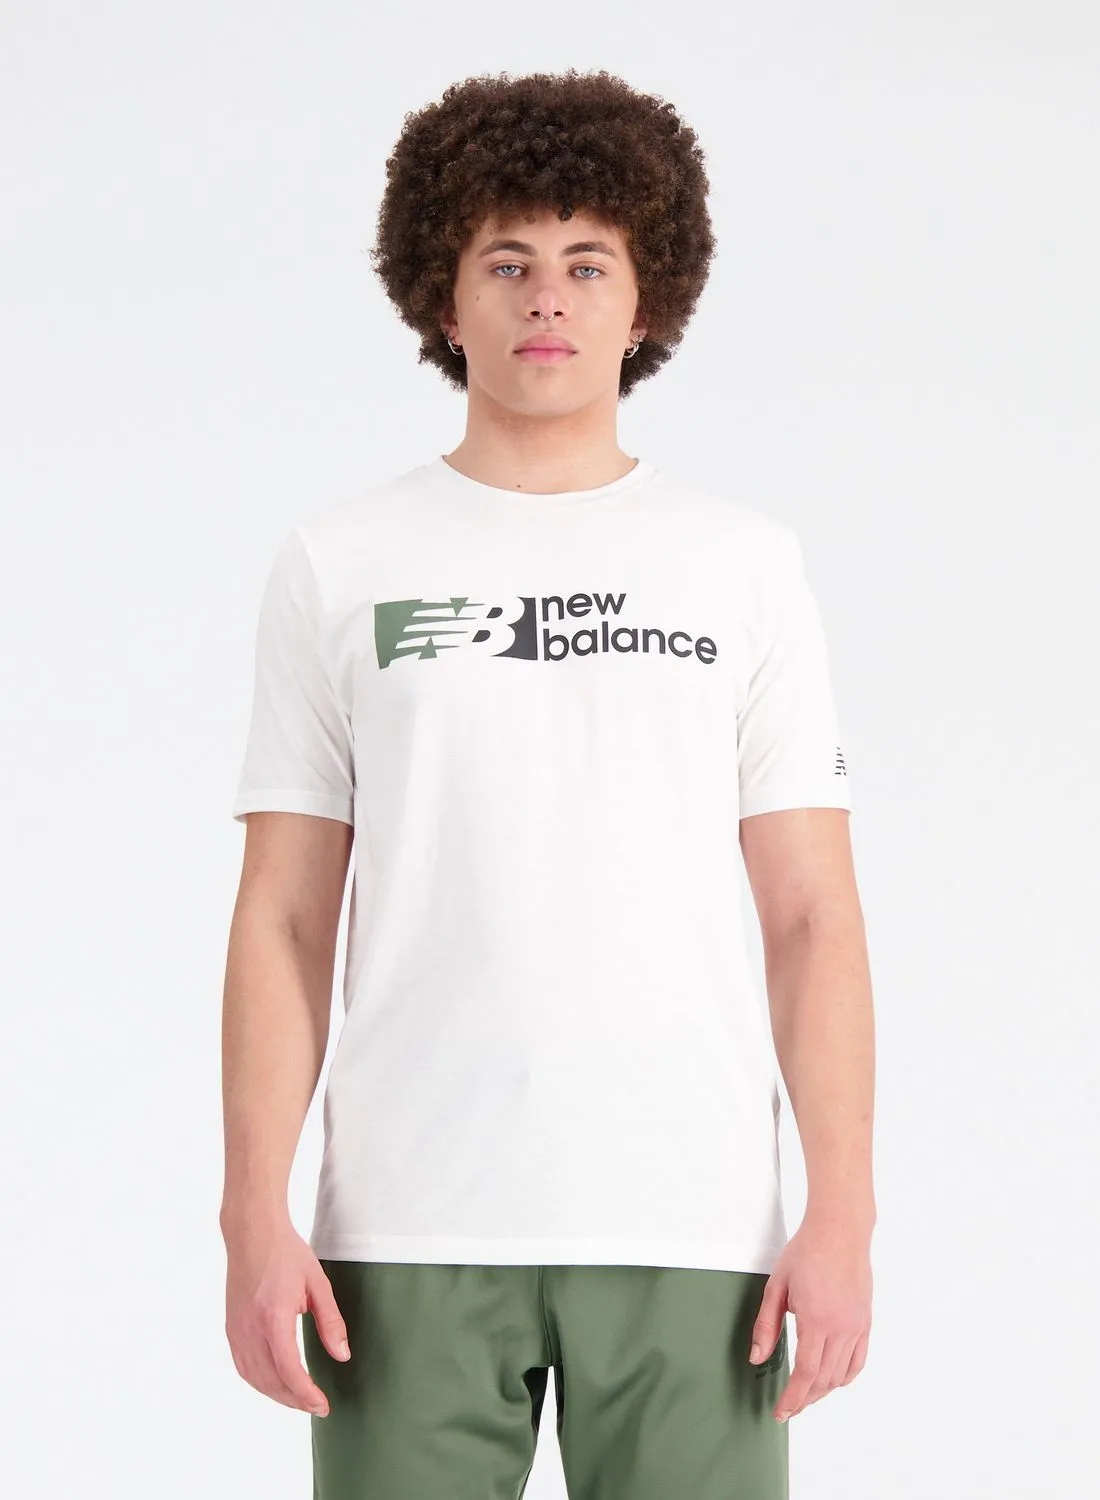 New Balance Tenacity Heathertech Graphic T-Shirt